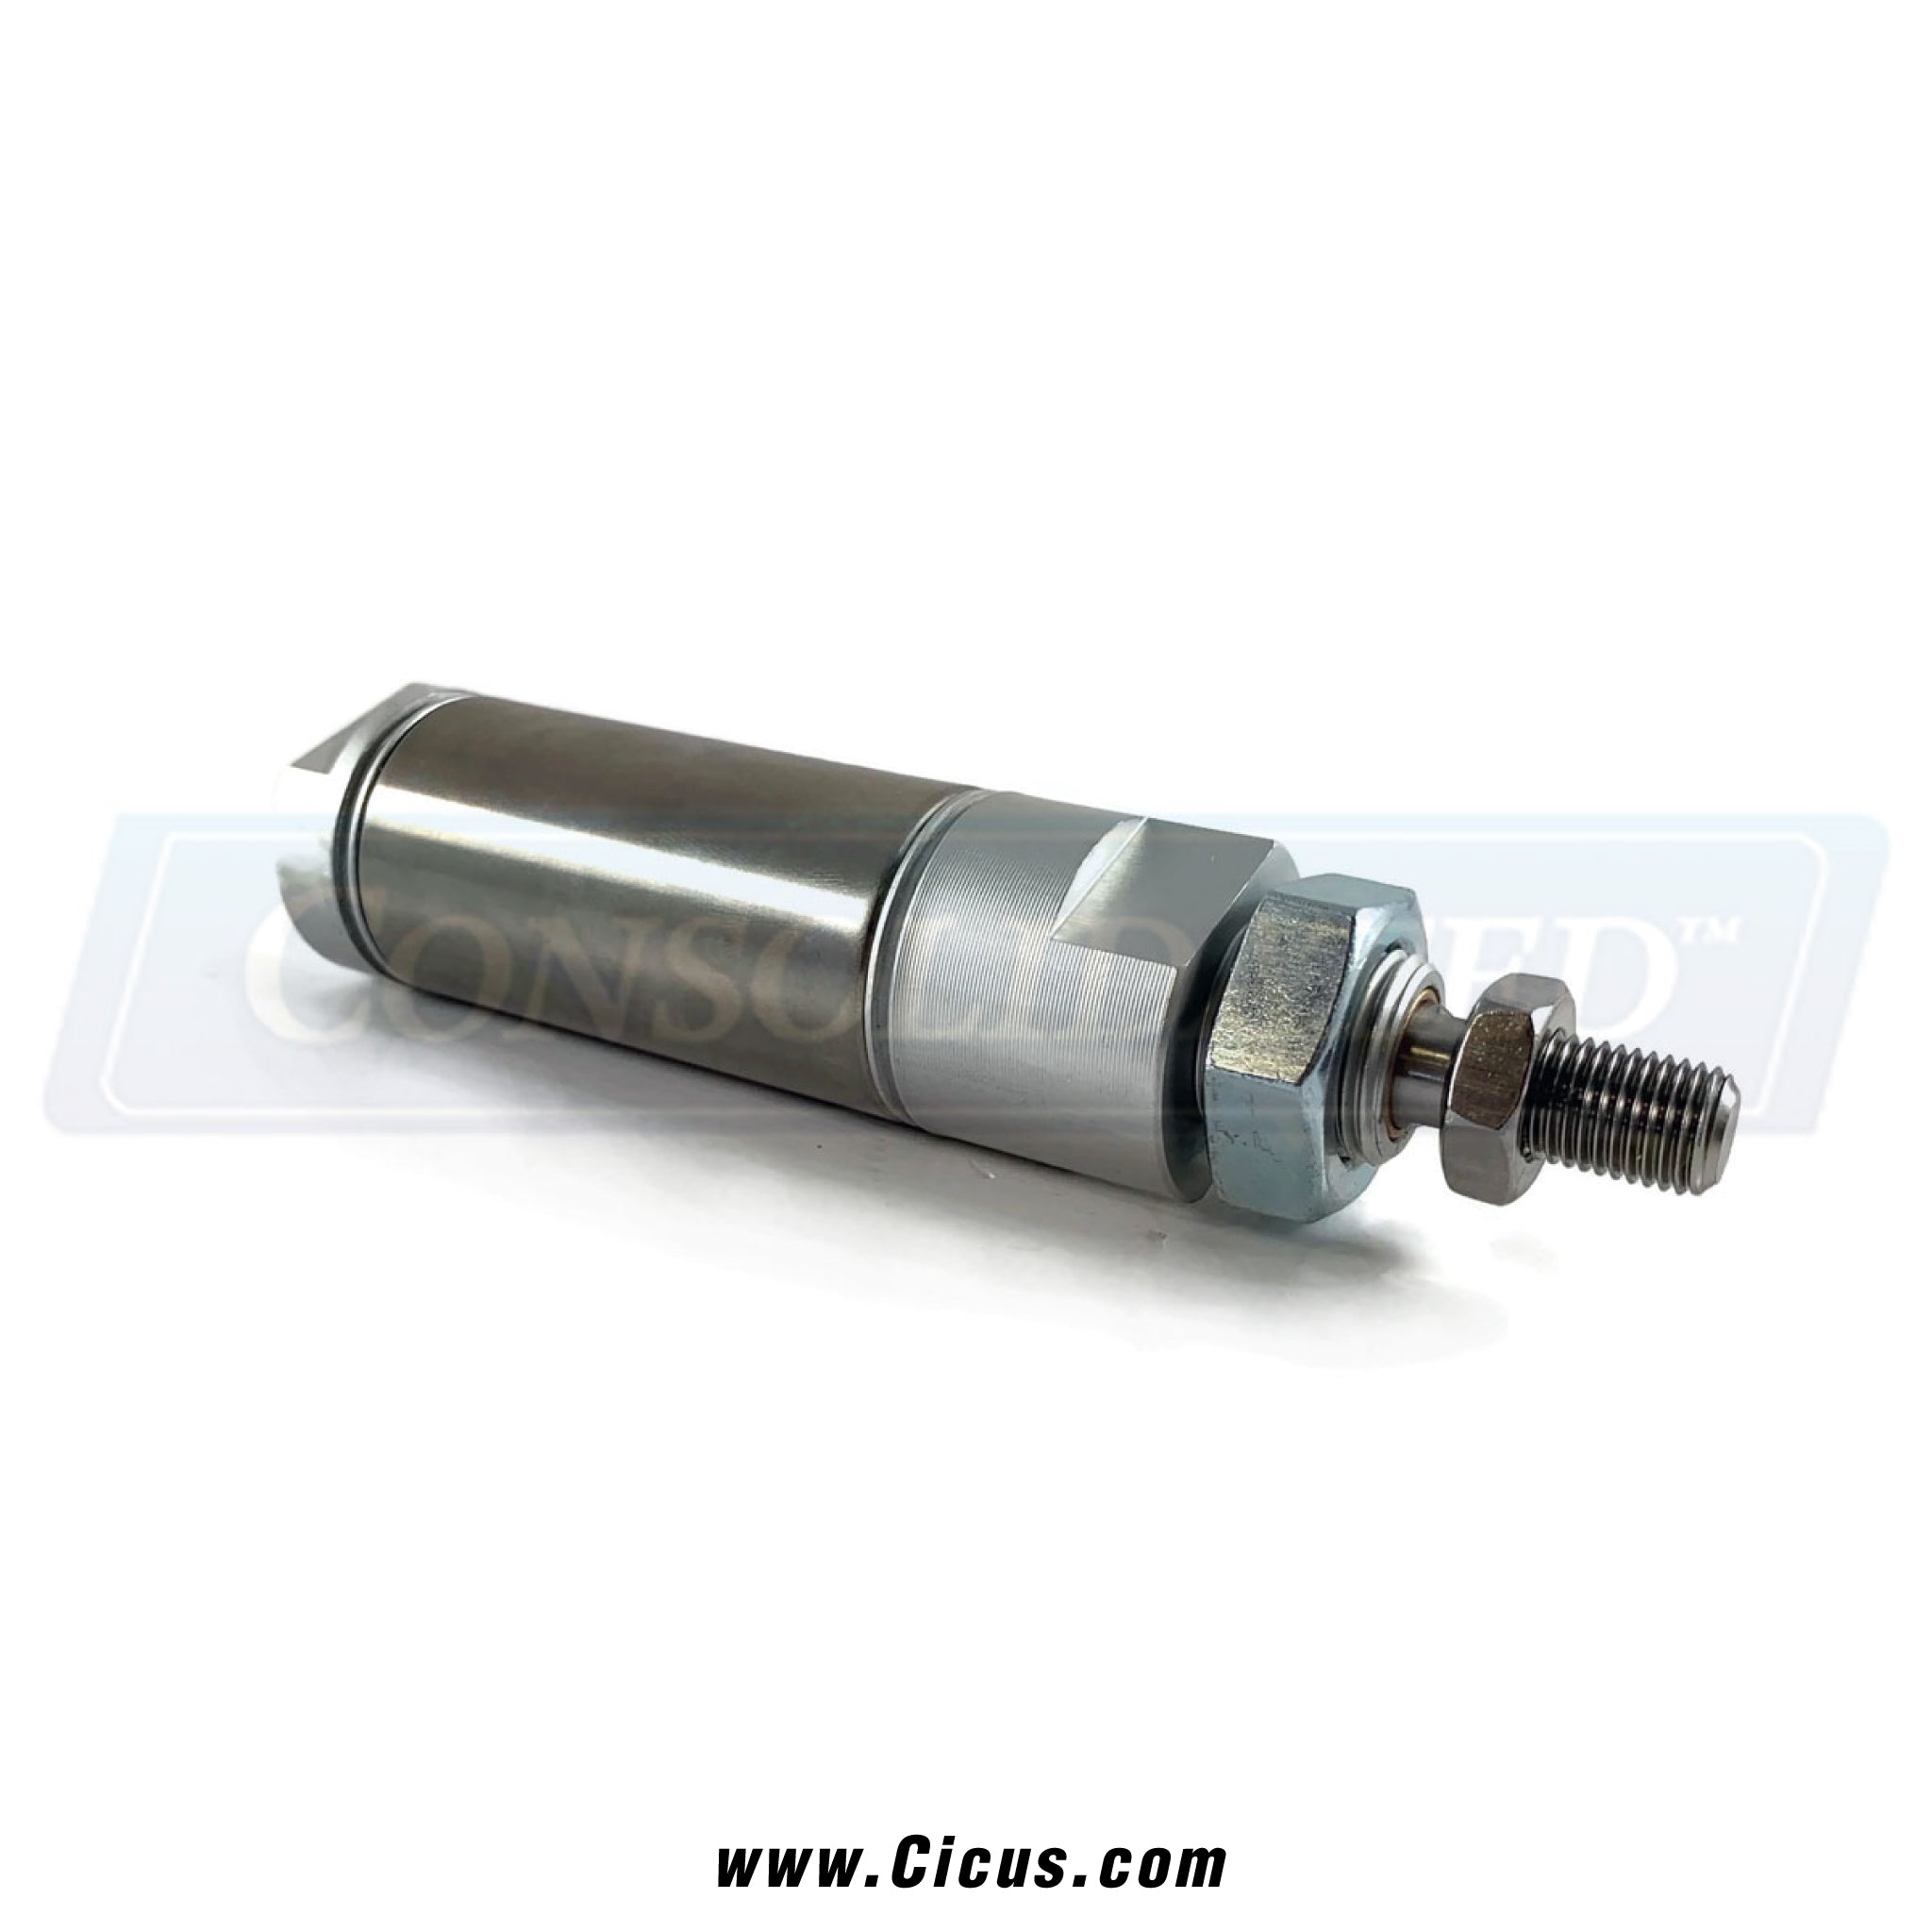 Chicago Dryer Air Cylinder 1-1/4" Bore 1" Stroke [0208-440]